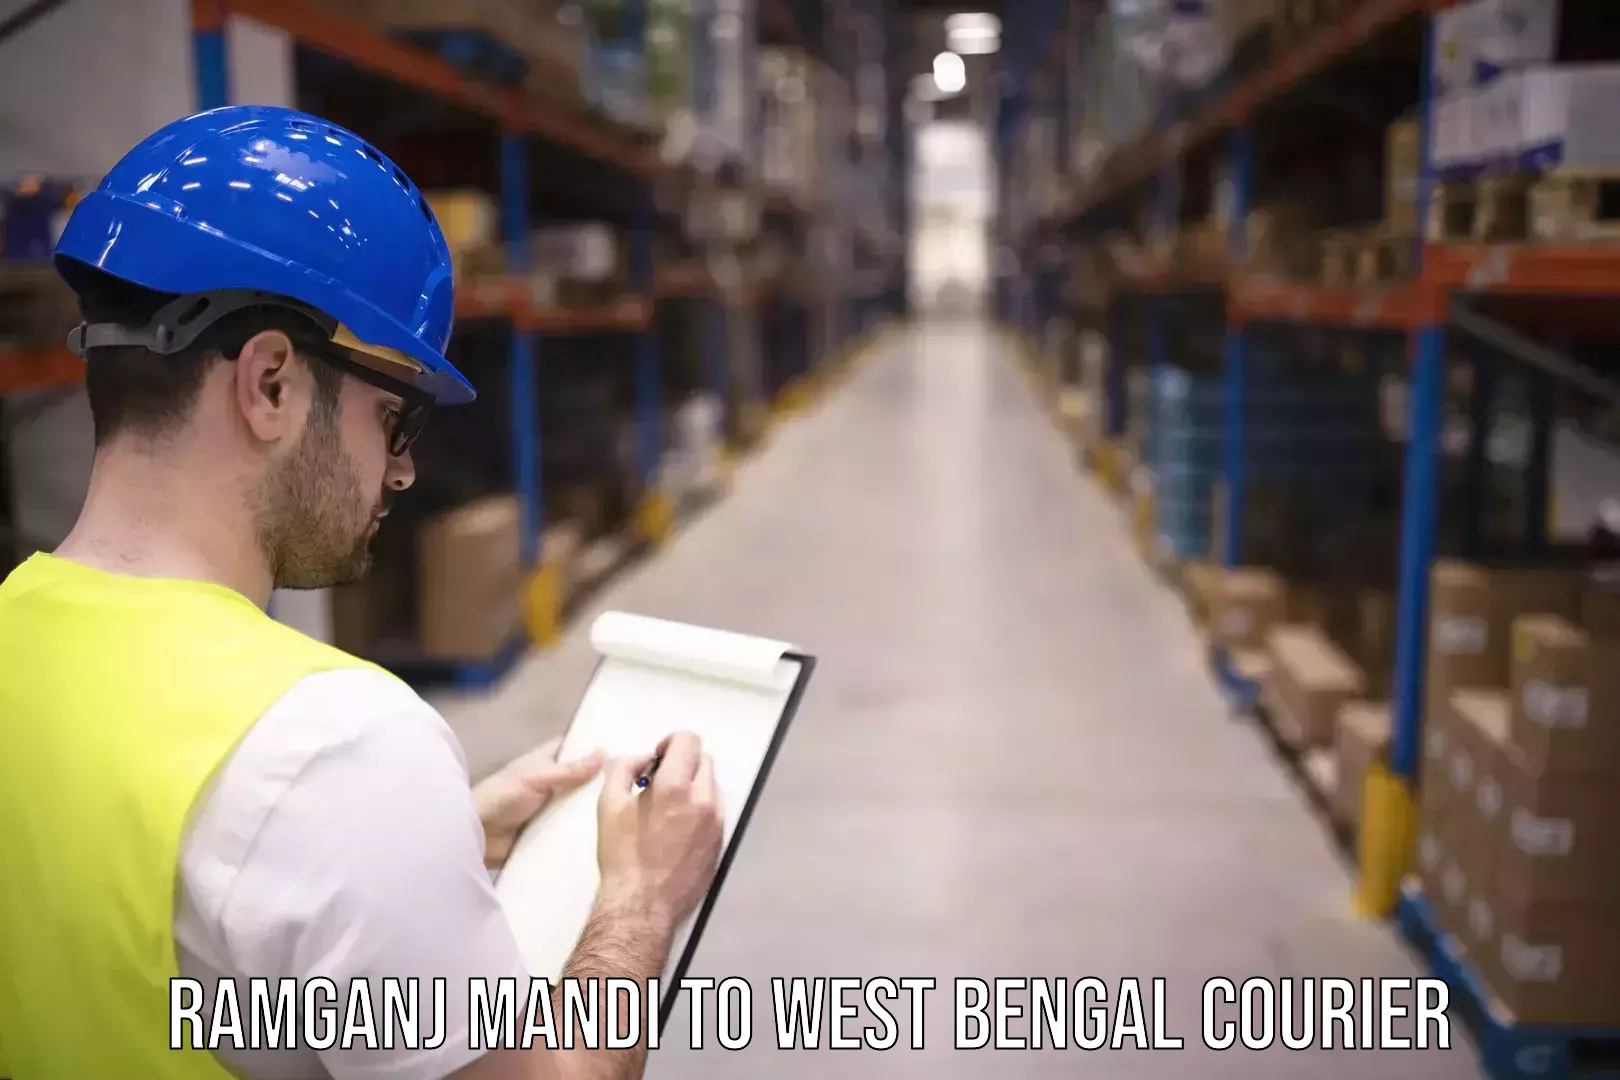 Doorstep delivery service Ramganj Mandi to West Bengal